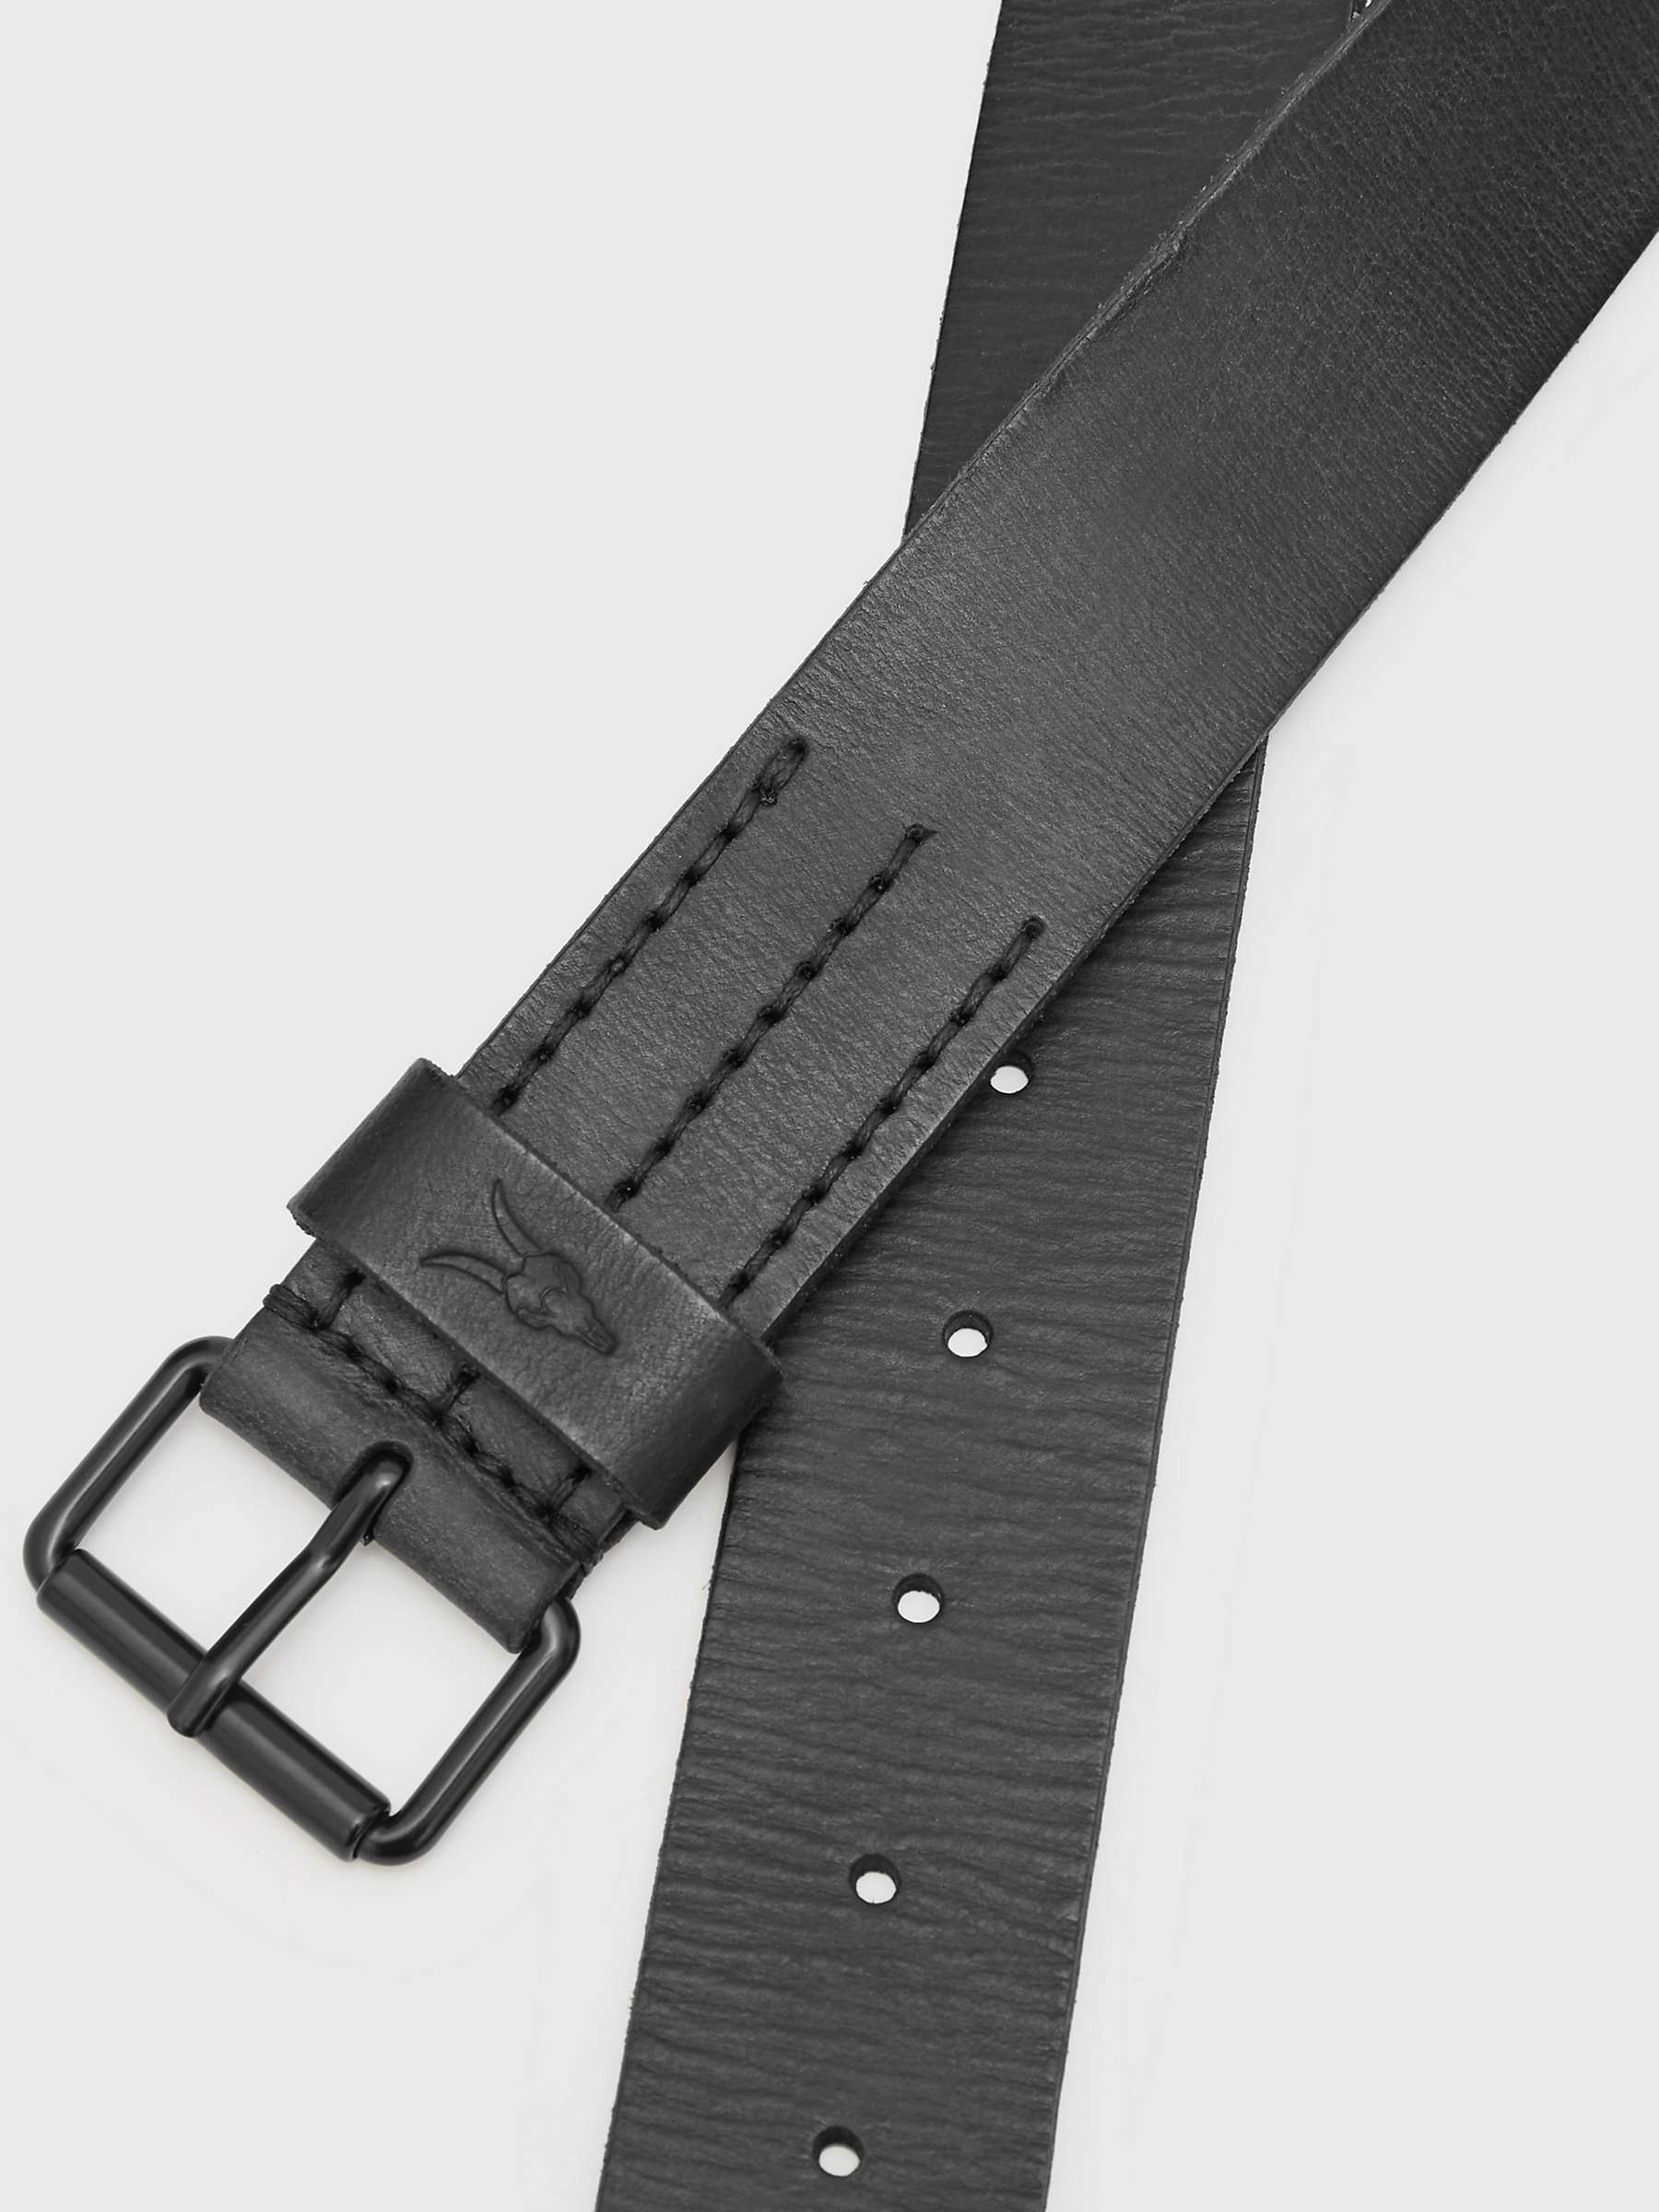 AllSaints Dunston Leather Belt, Black at John Lewis & Partners